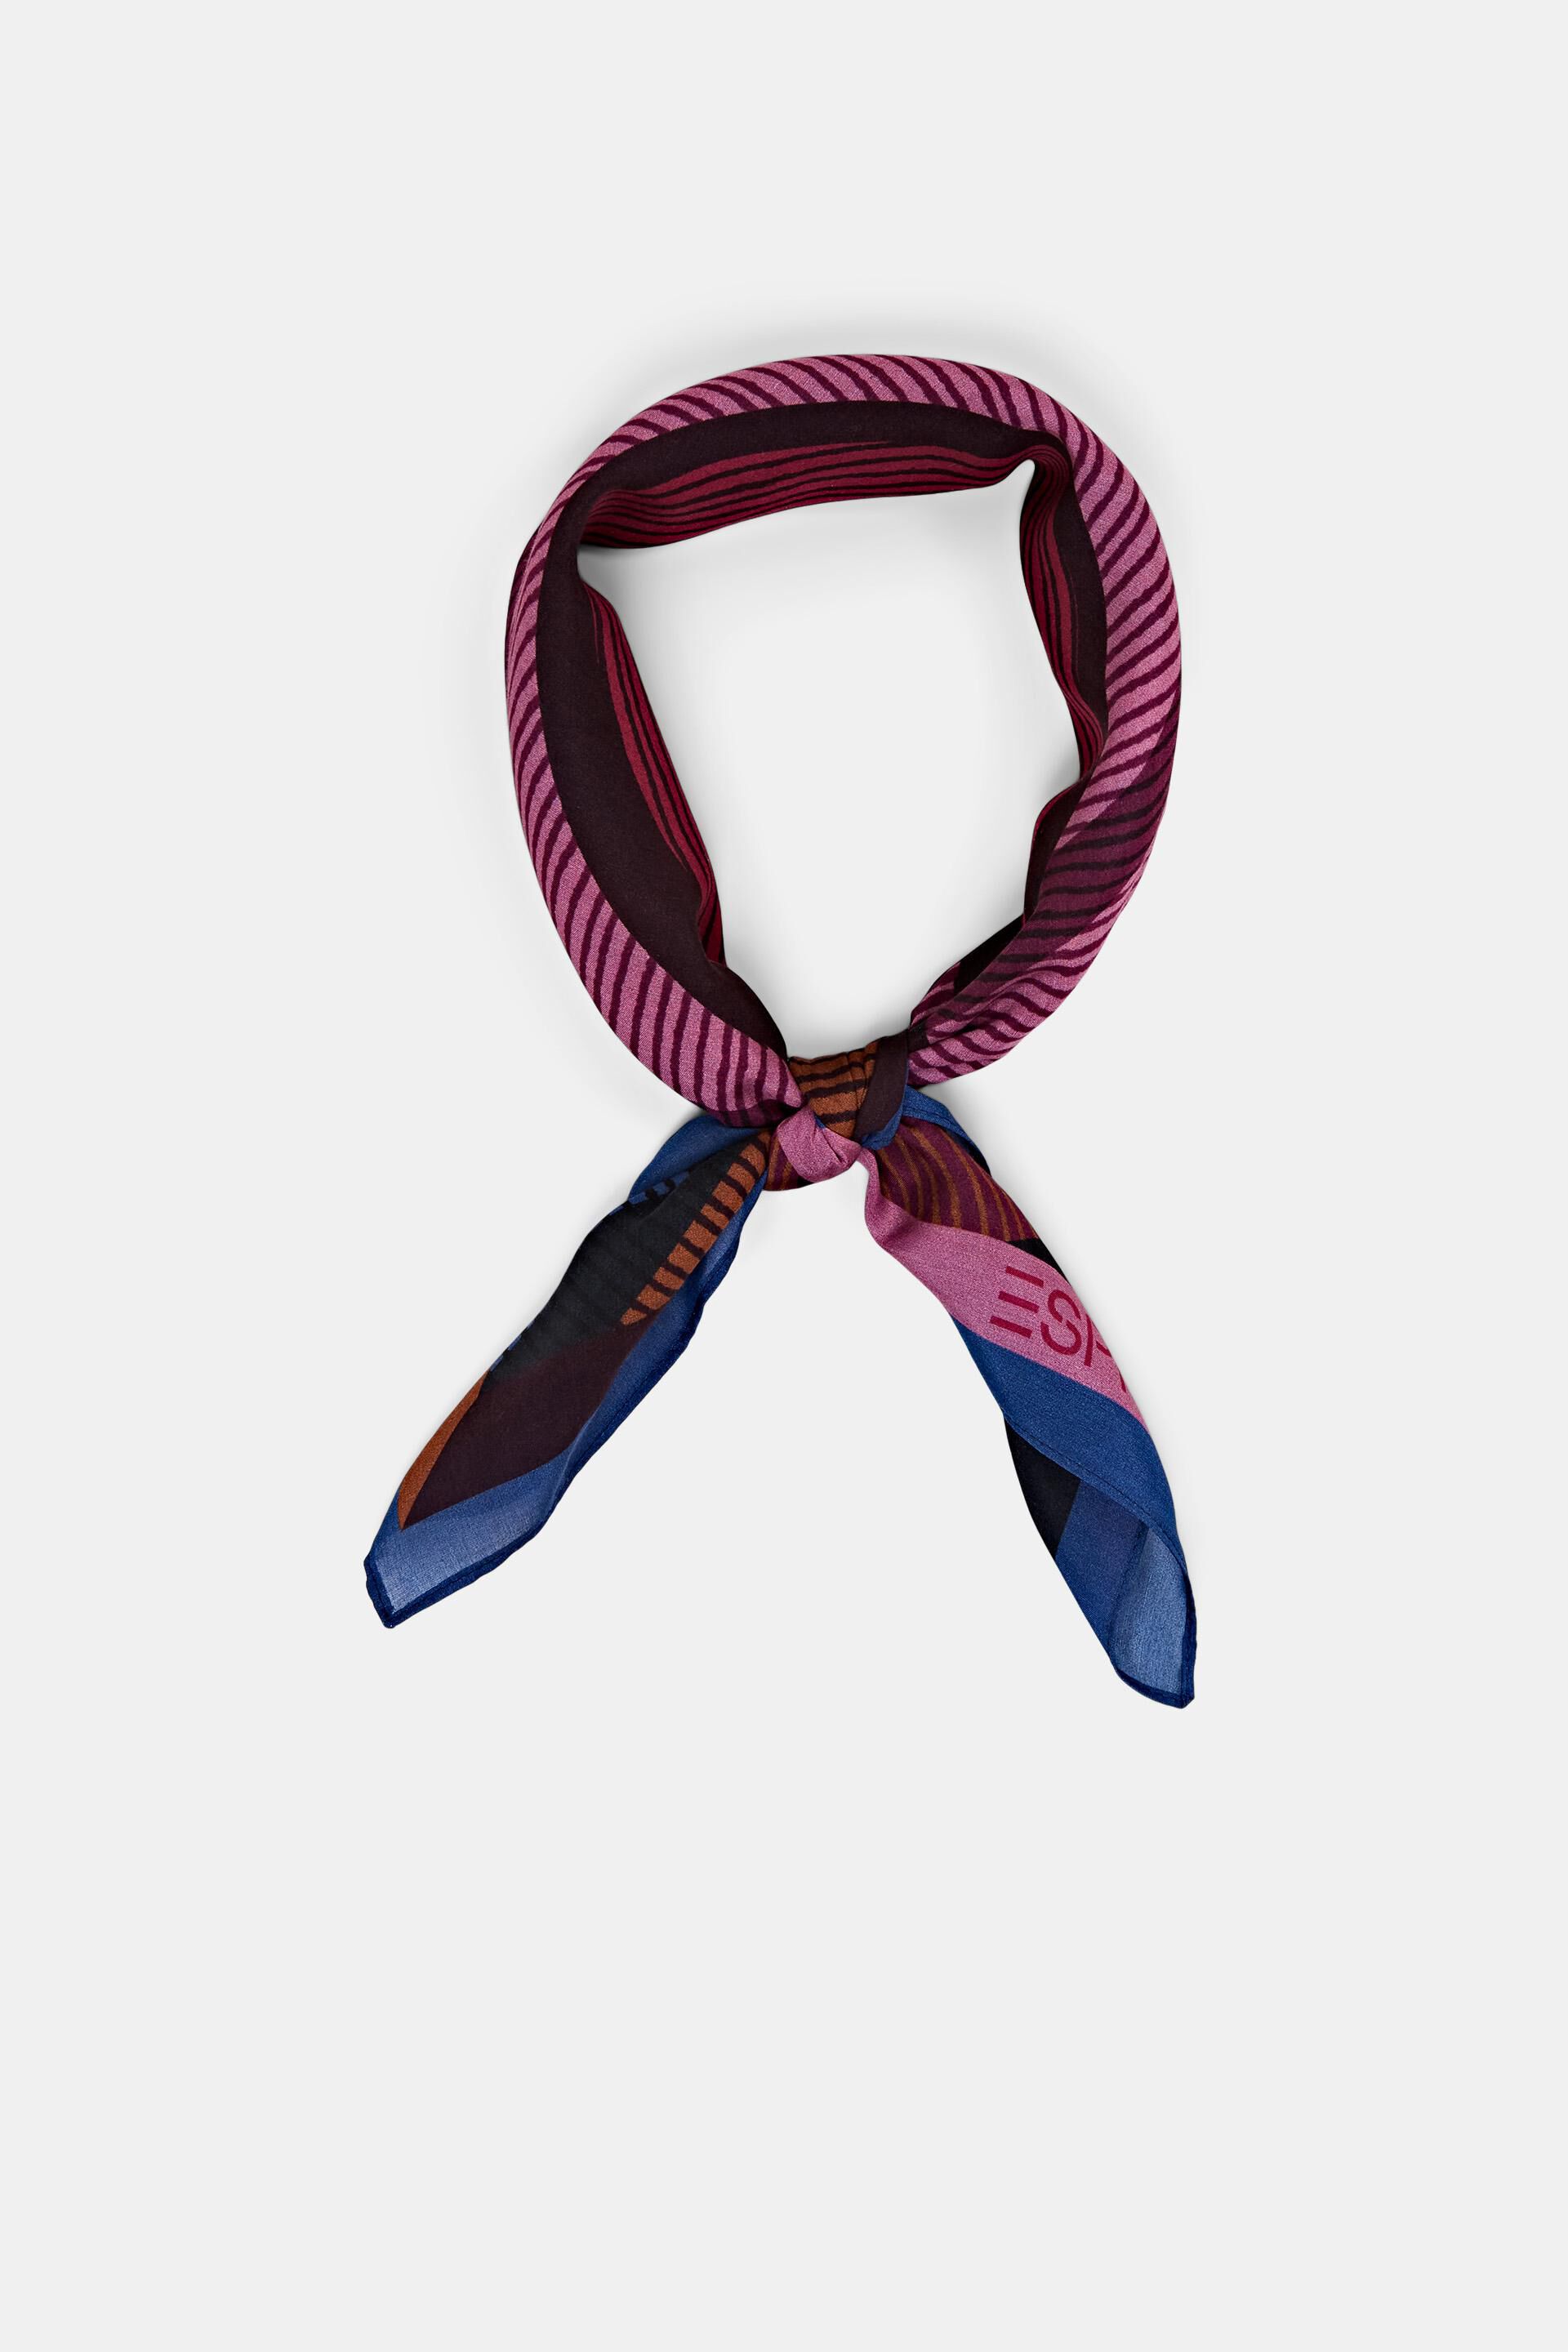 Esprit Online Store Printed bandana, silk blend